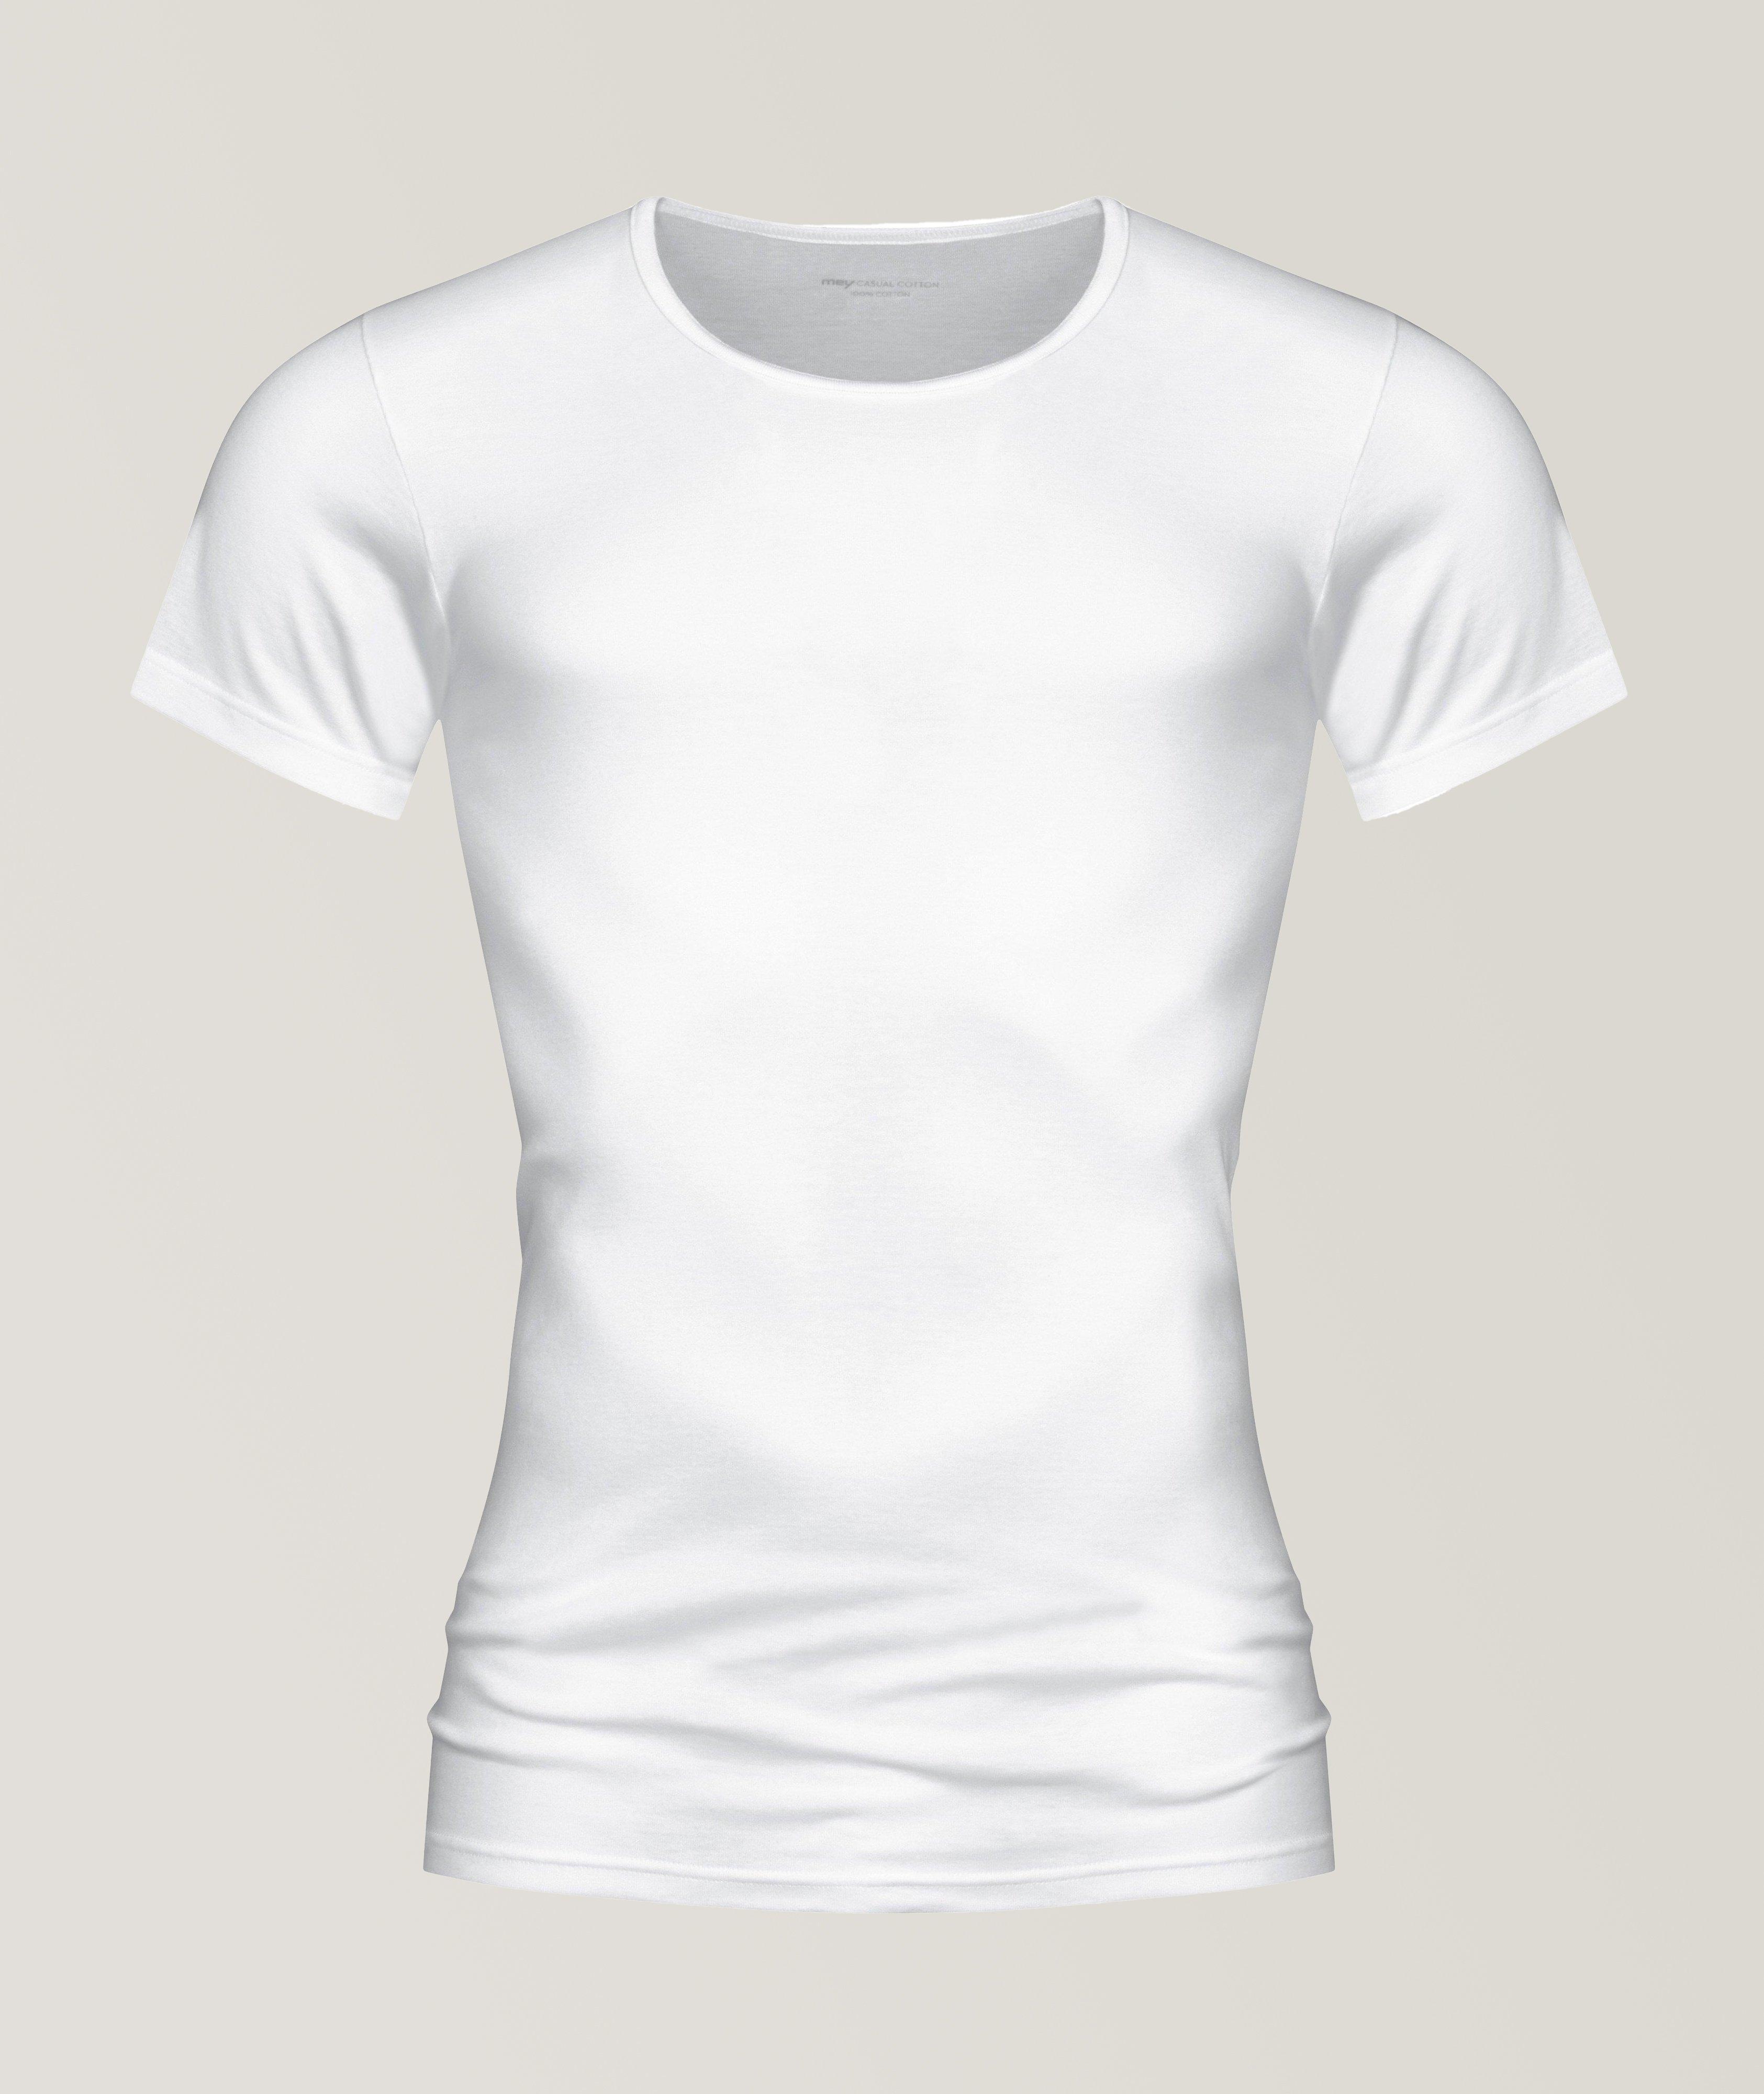 Casual Pima Cotton Short Sleeve T-Shirt image 0